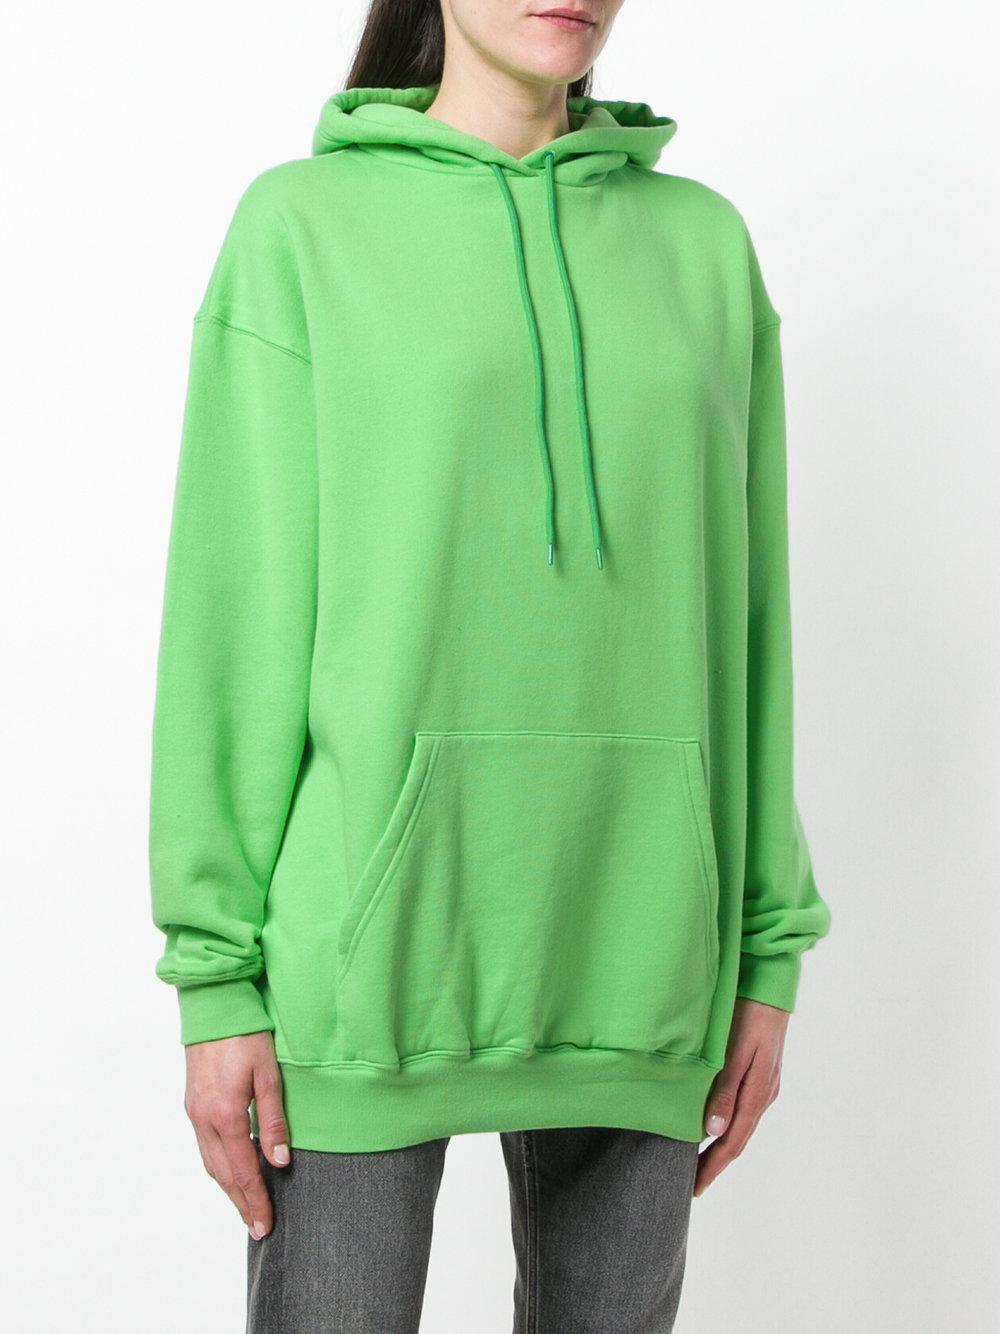 Balenciaga Cotton Logo Hoodie Sweater in Green - Lyst